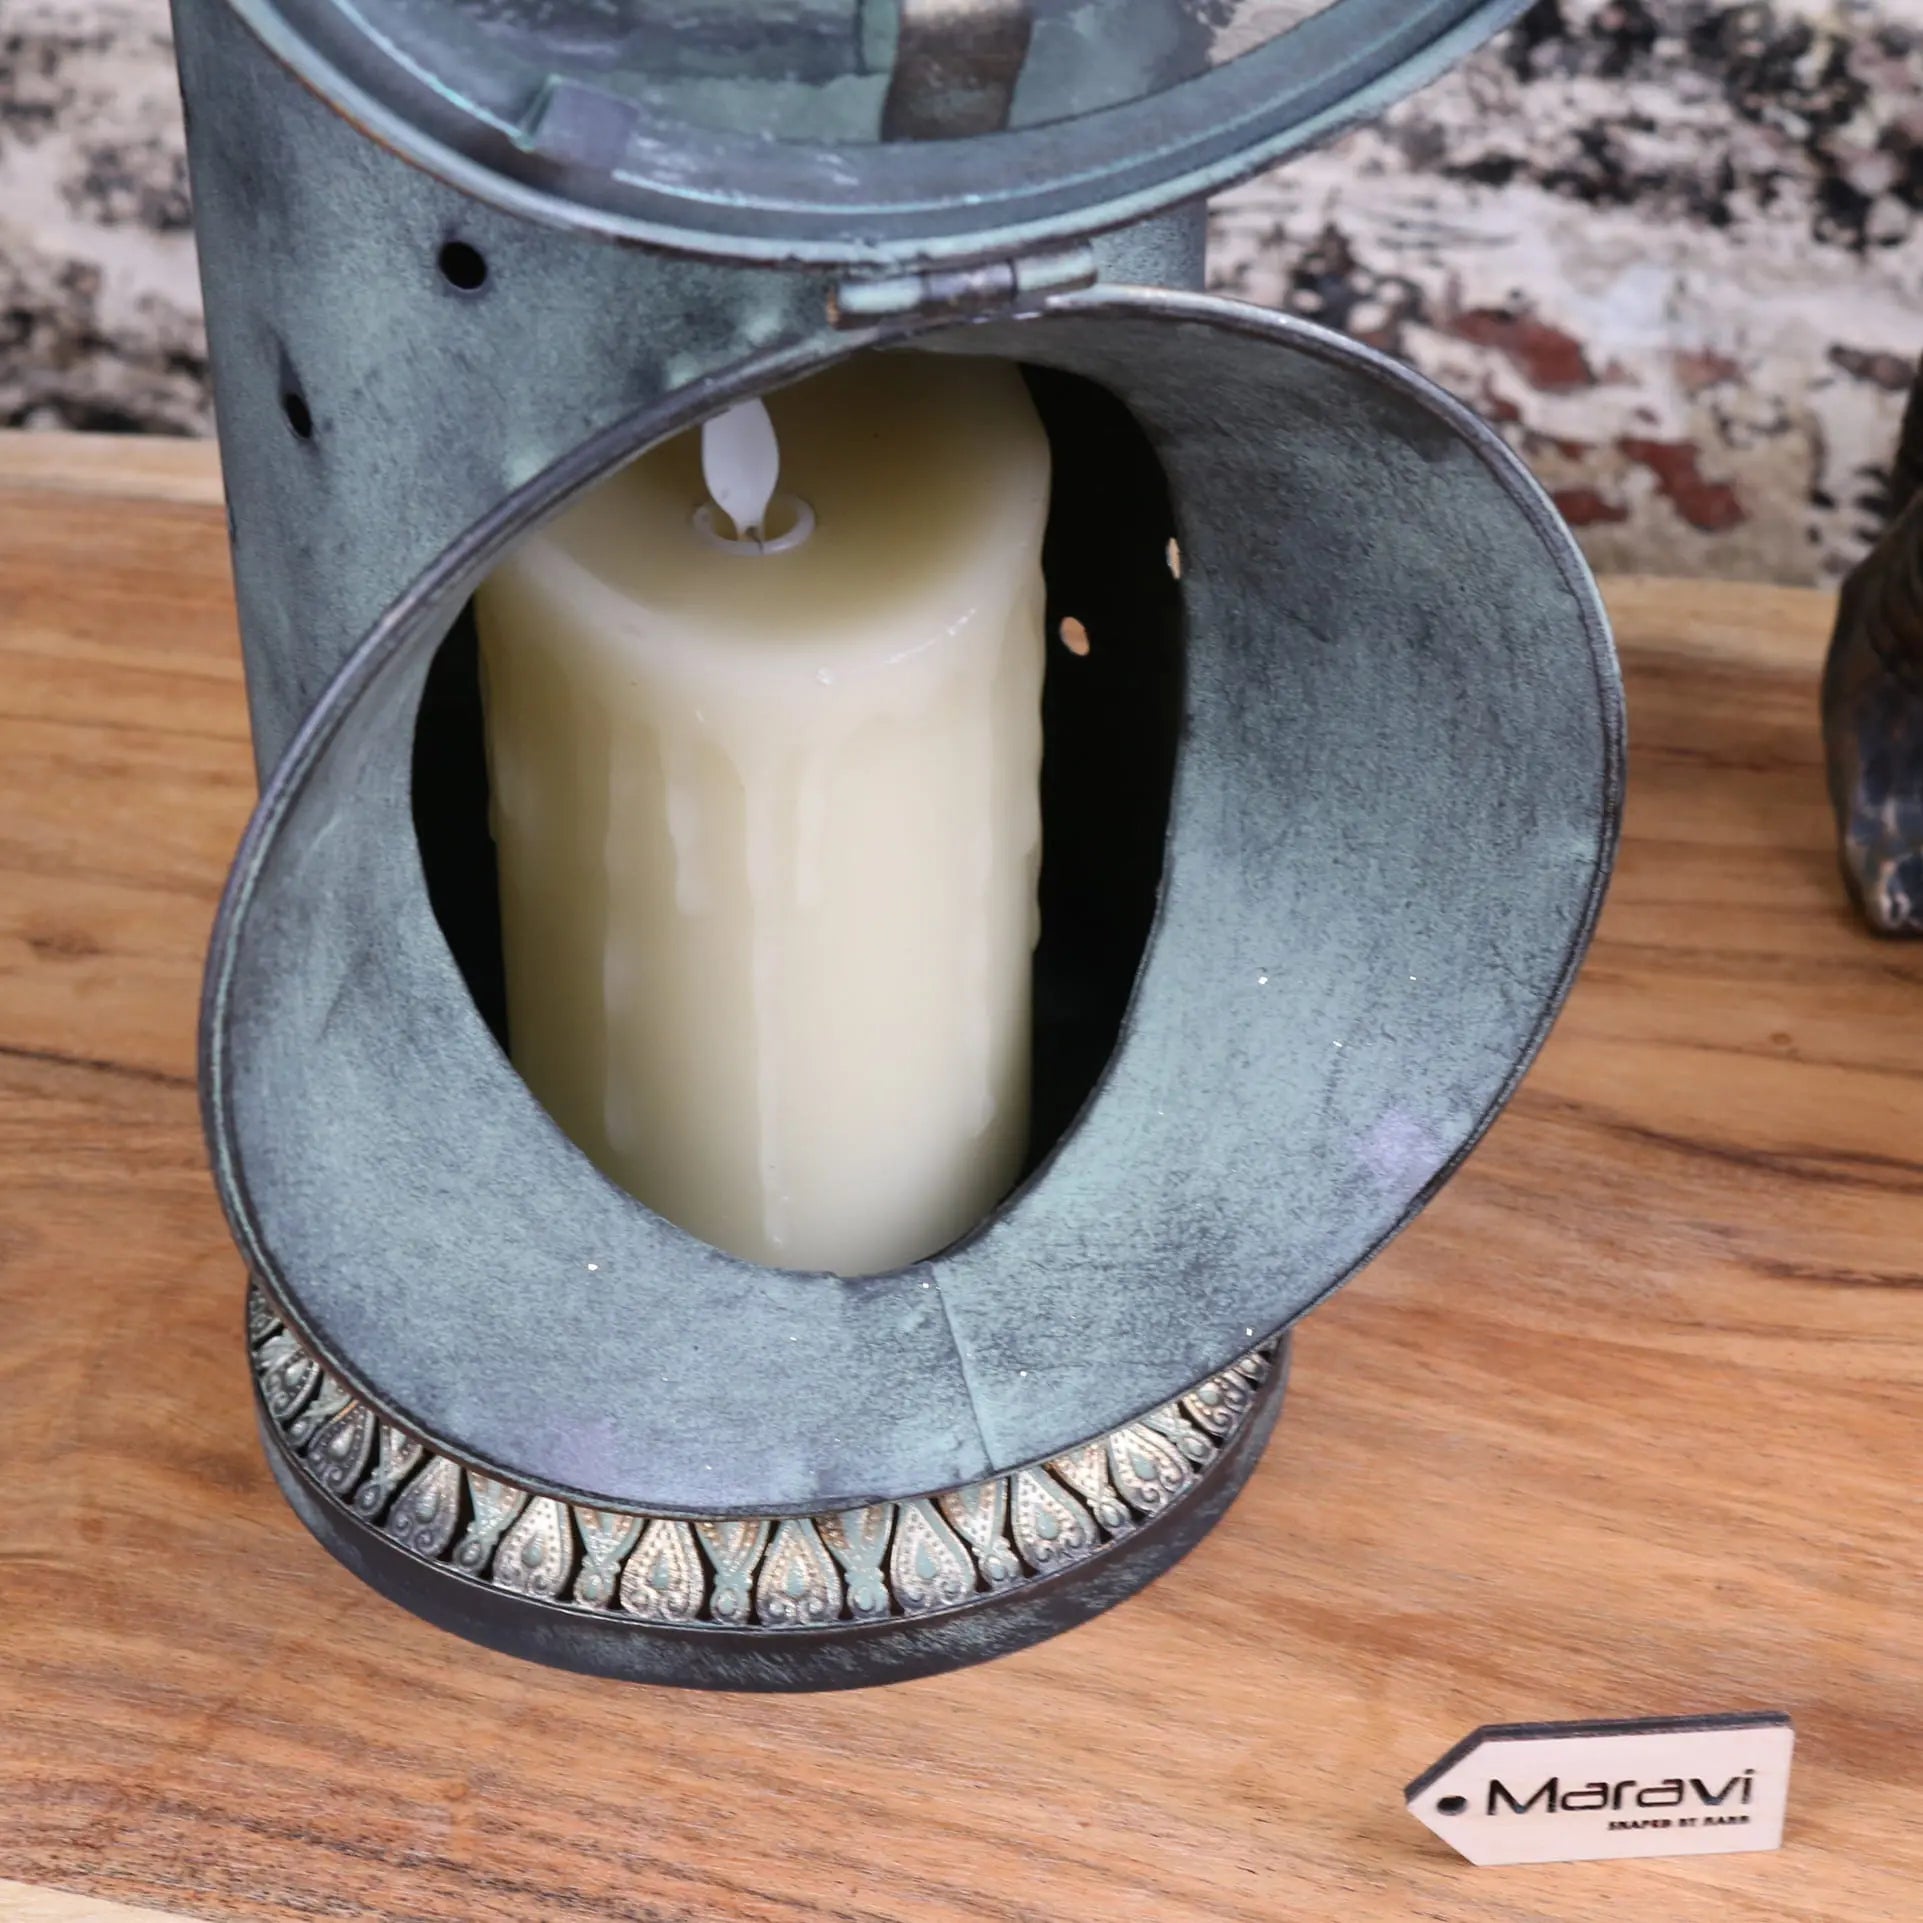 Orchha Vintage Style Railway Lantern - Candle Inside Lantern